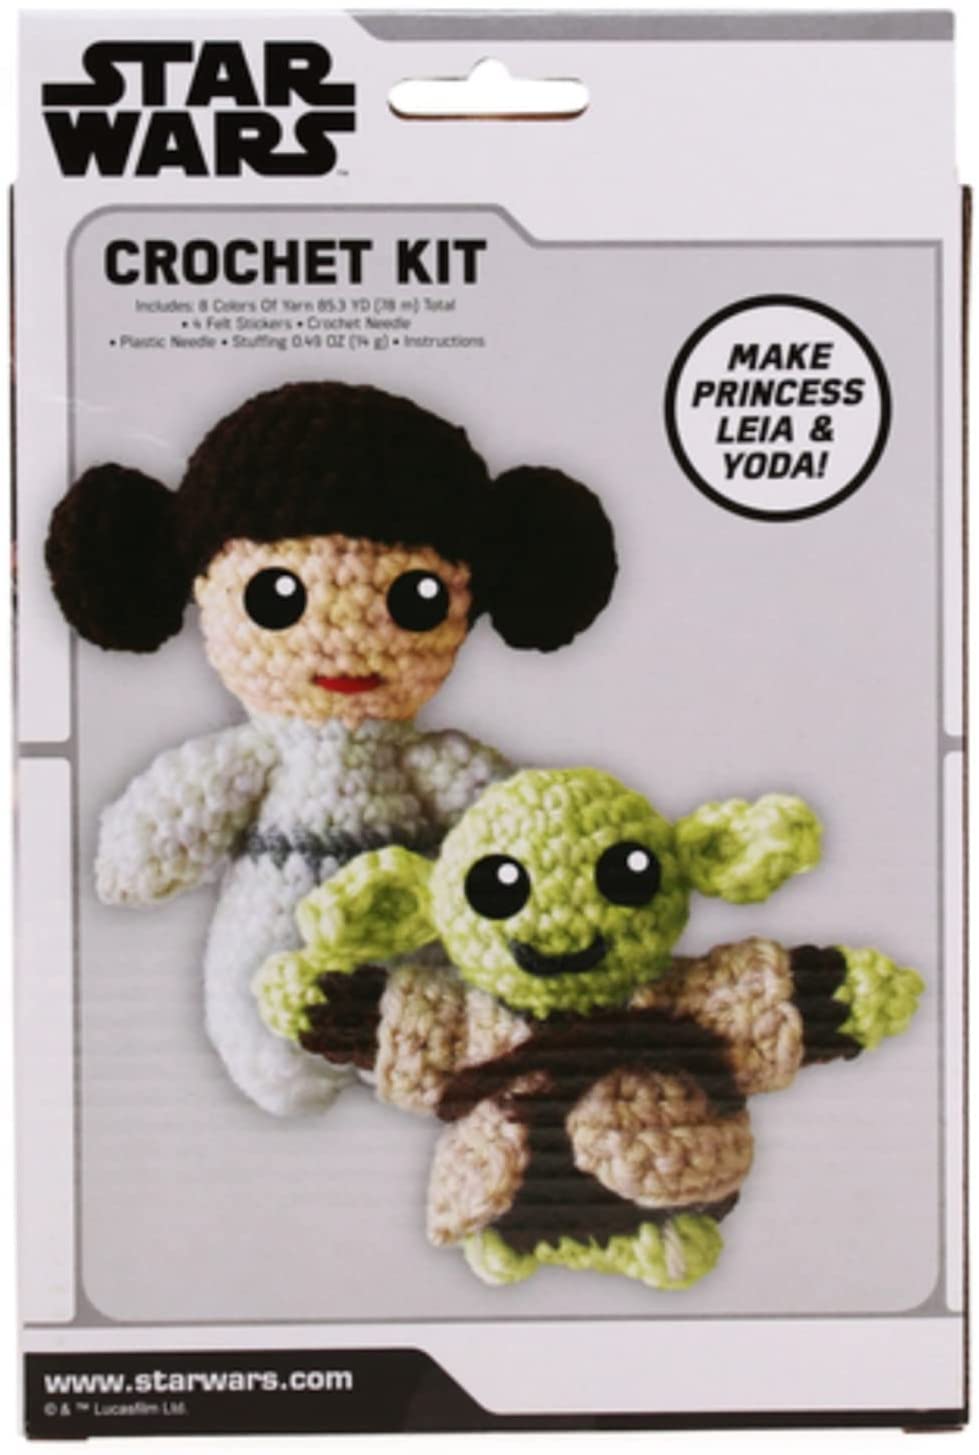 Star Wars Crochet Craft Kit - Make Princess Leia and Yoda - Everything You Need